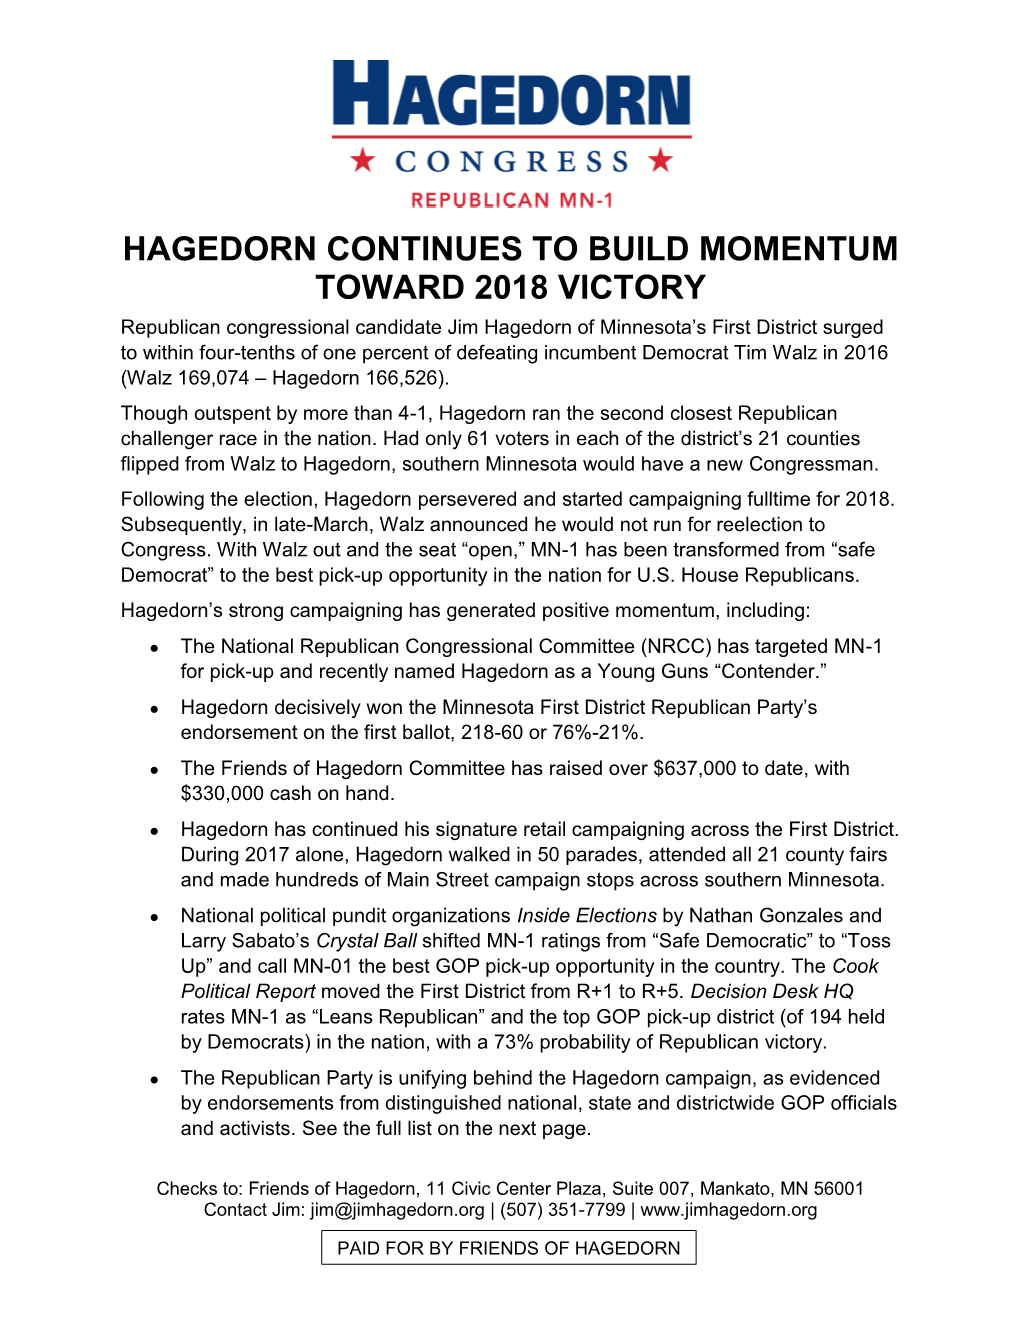 Hagedorn Continues to Build Momentum Toward 2018